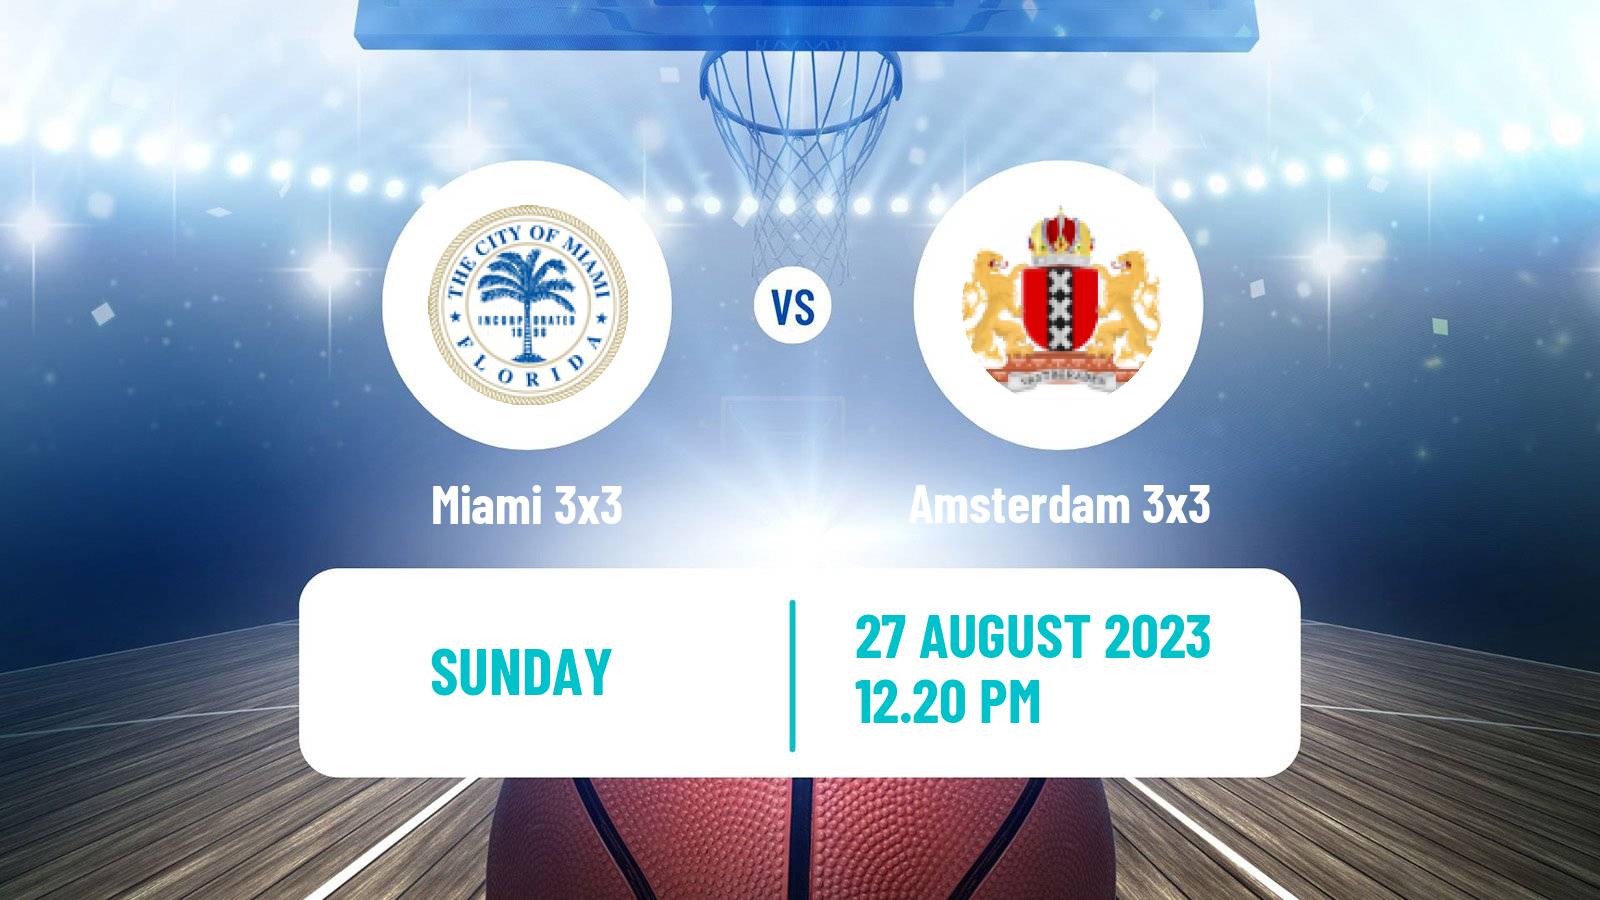 Basketball World Tour Debrecen 3x3 Miami 3x3 - Amsterdam 3x3